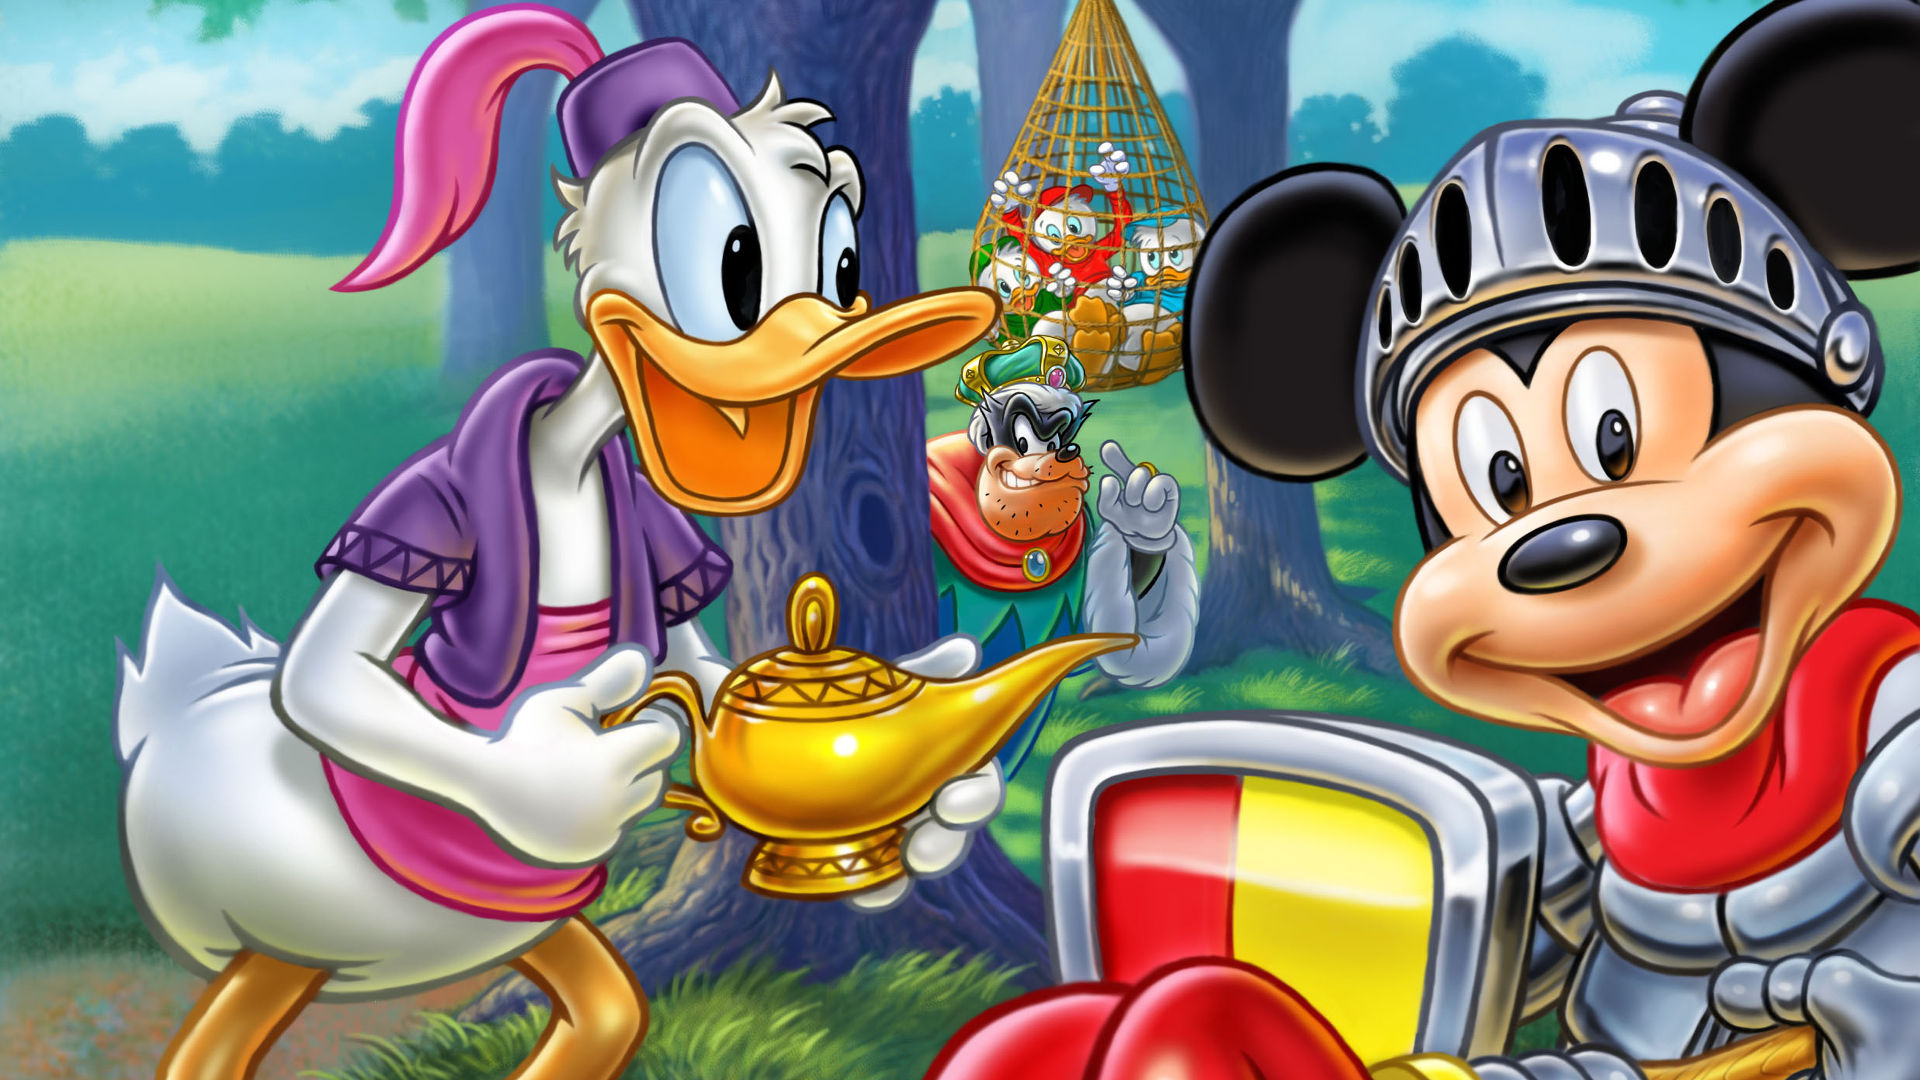 Mickey s adventures. Mickey to Donald - Magical Adventure 3 Snes. Mickey to Donald - Magical Adventure 3. Приключения Микки и Дональда 1993.